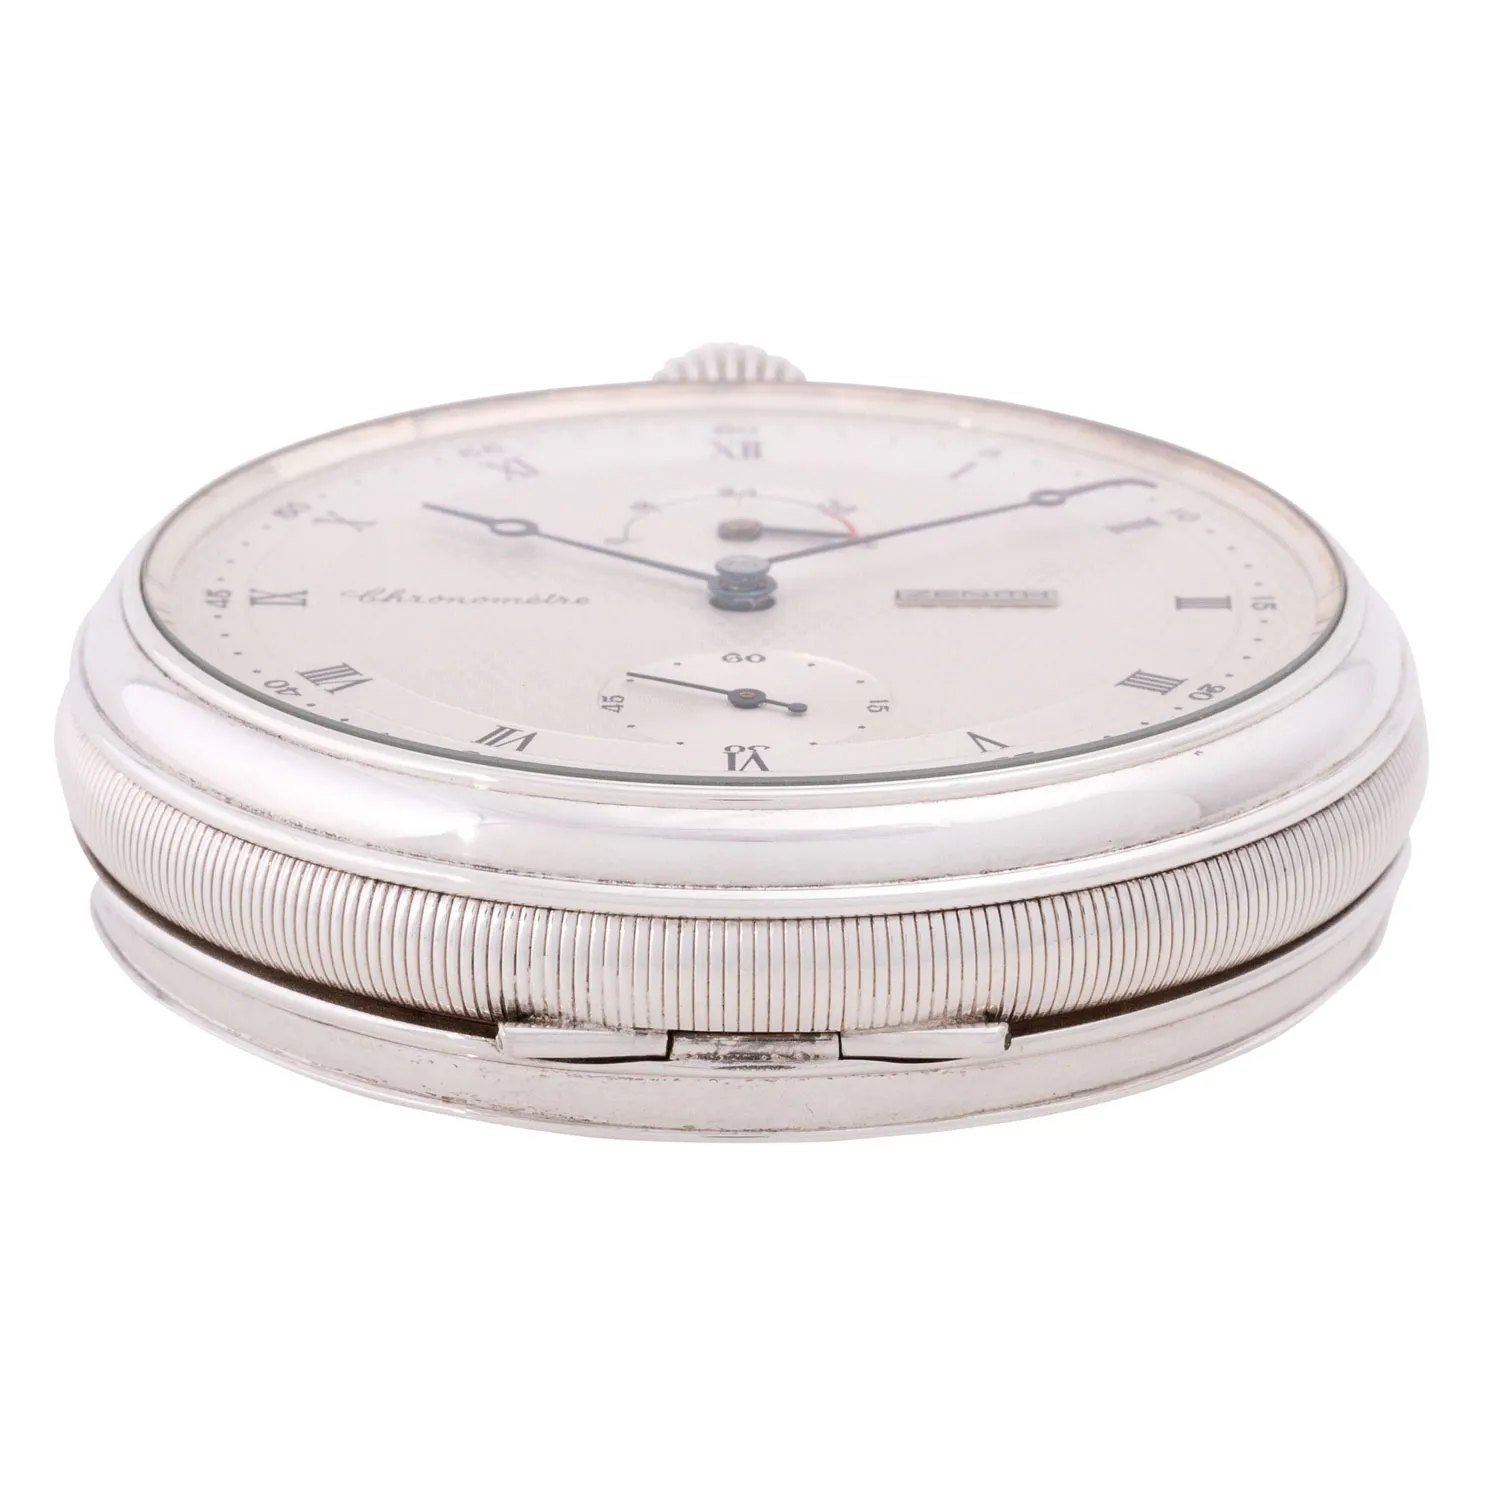 Zenith Deck Chronometer 07.0050.141 E 60mm Silver Silver 6